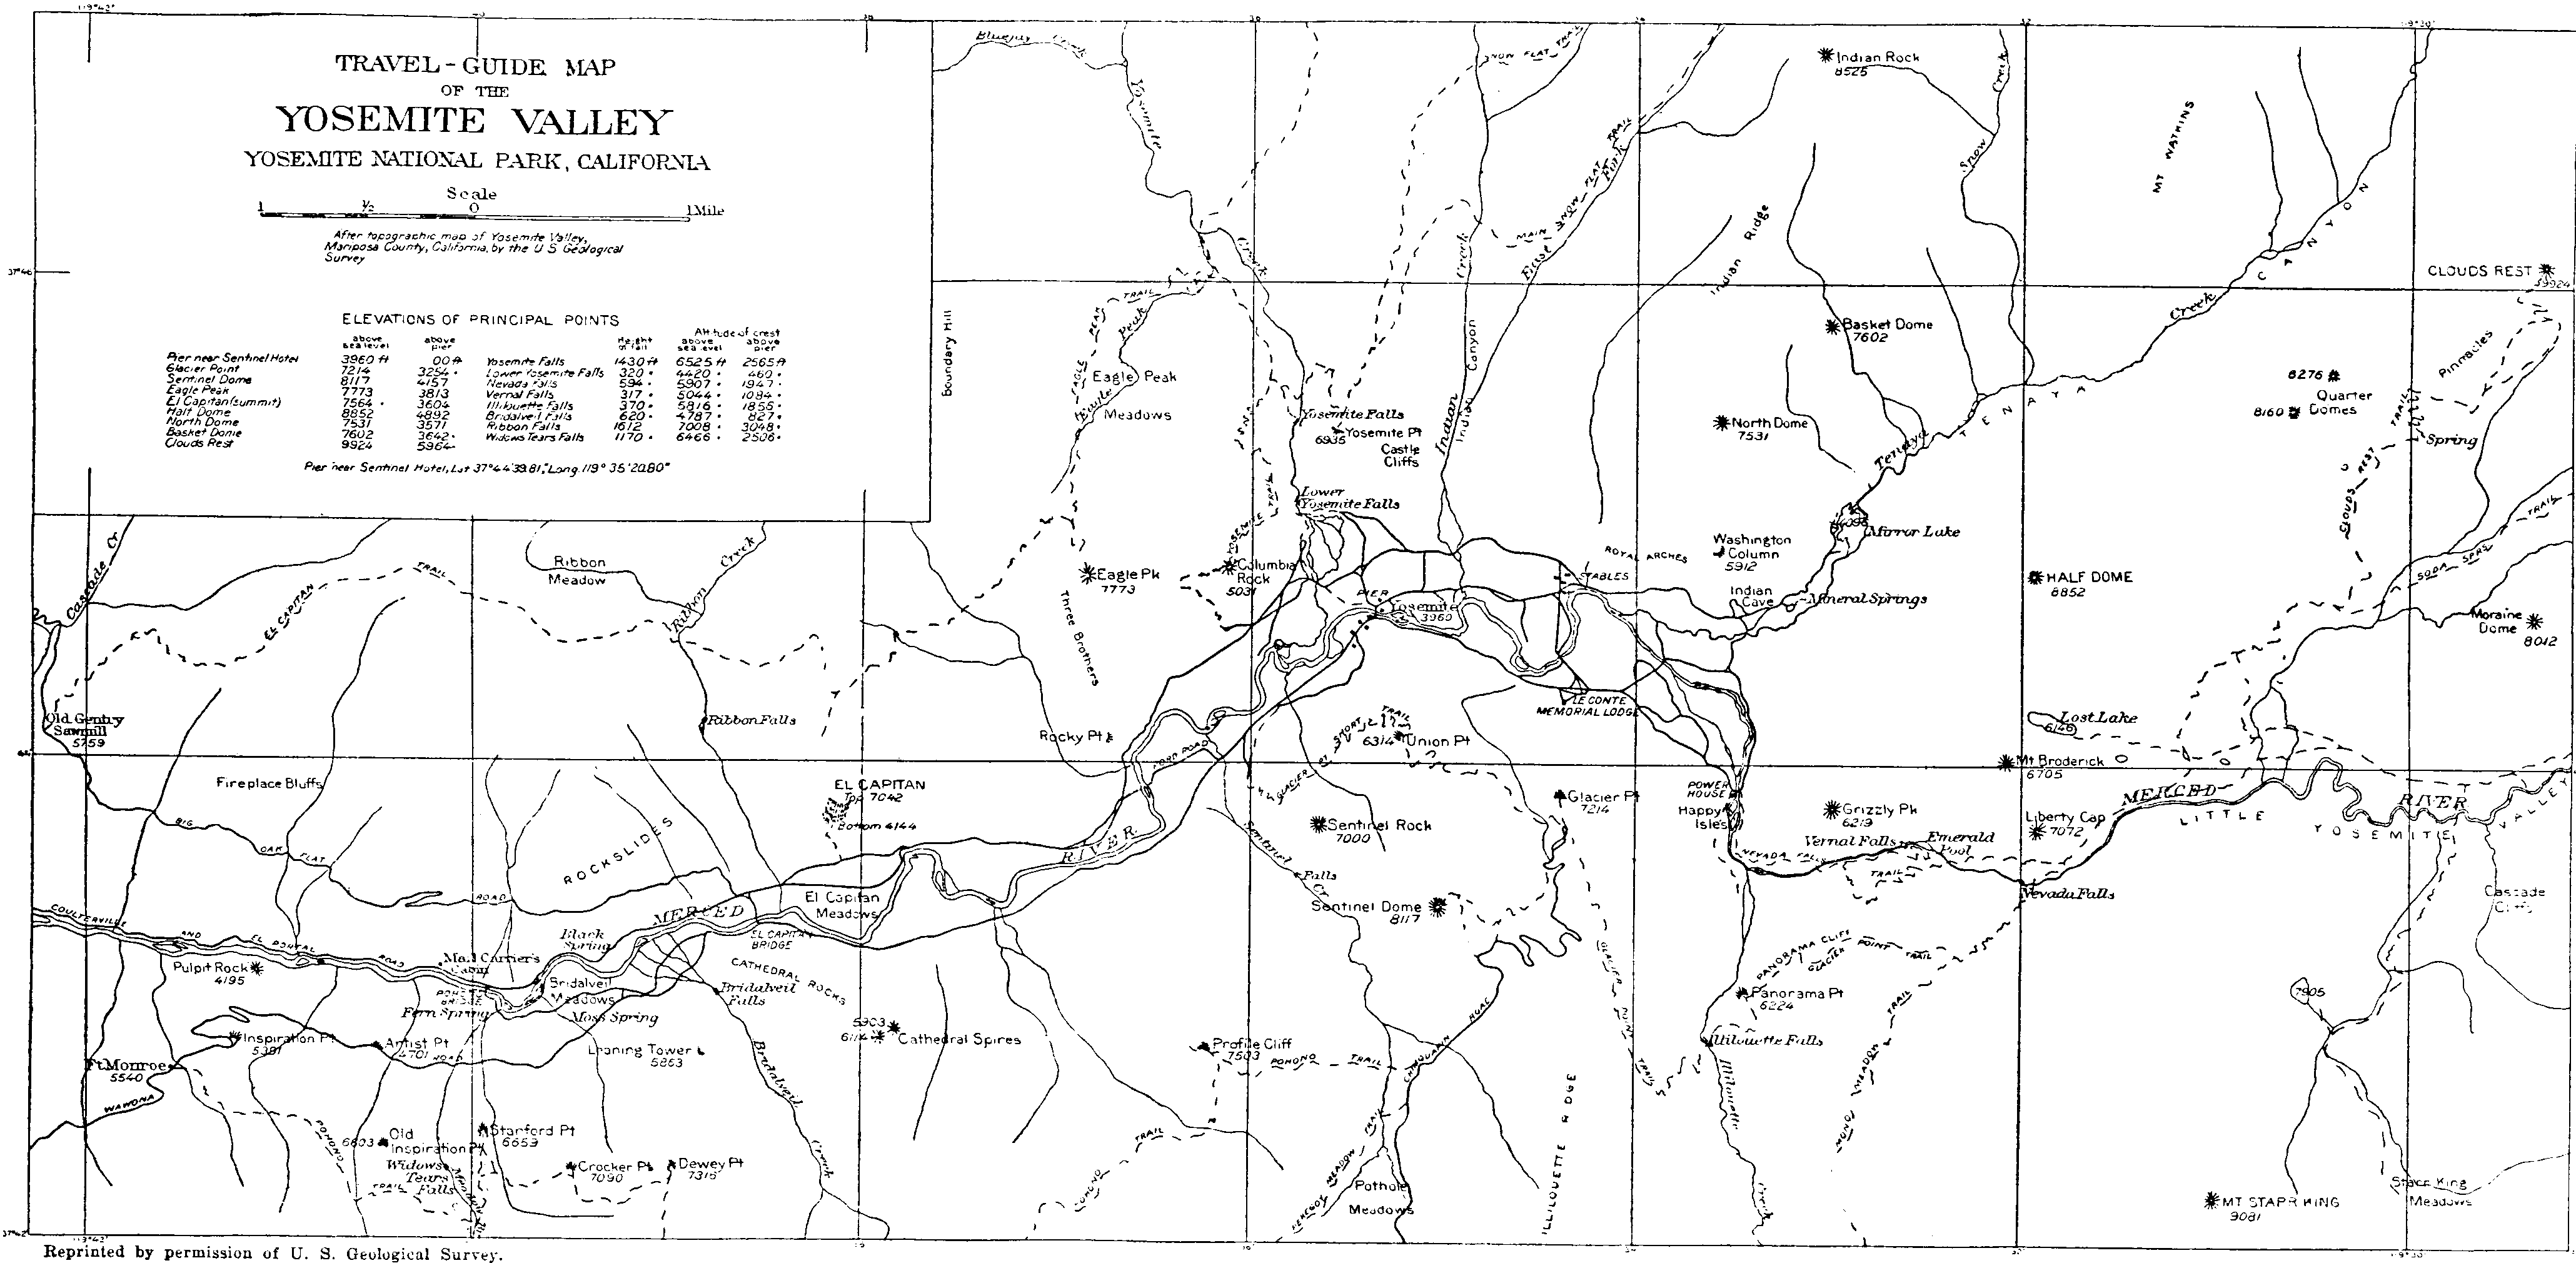 29 Map Of Yosemite Valley